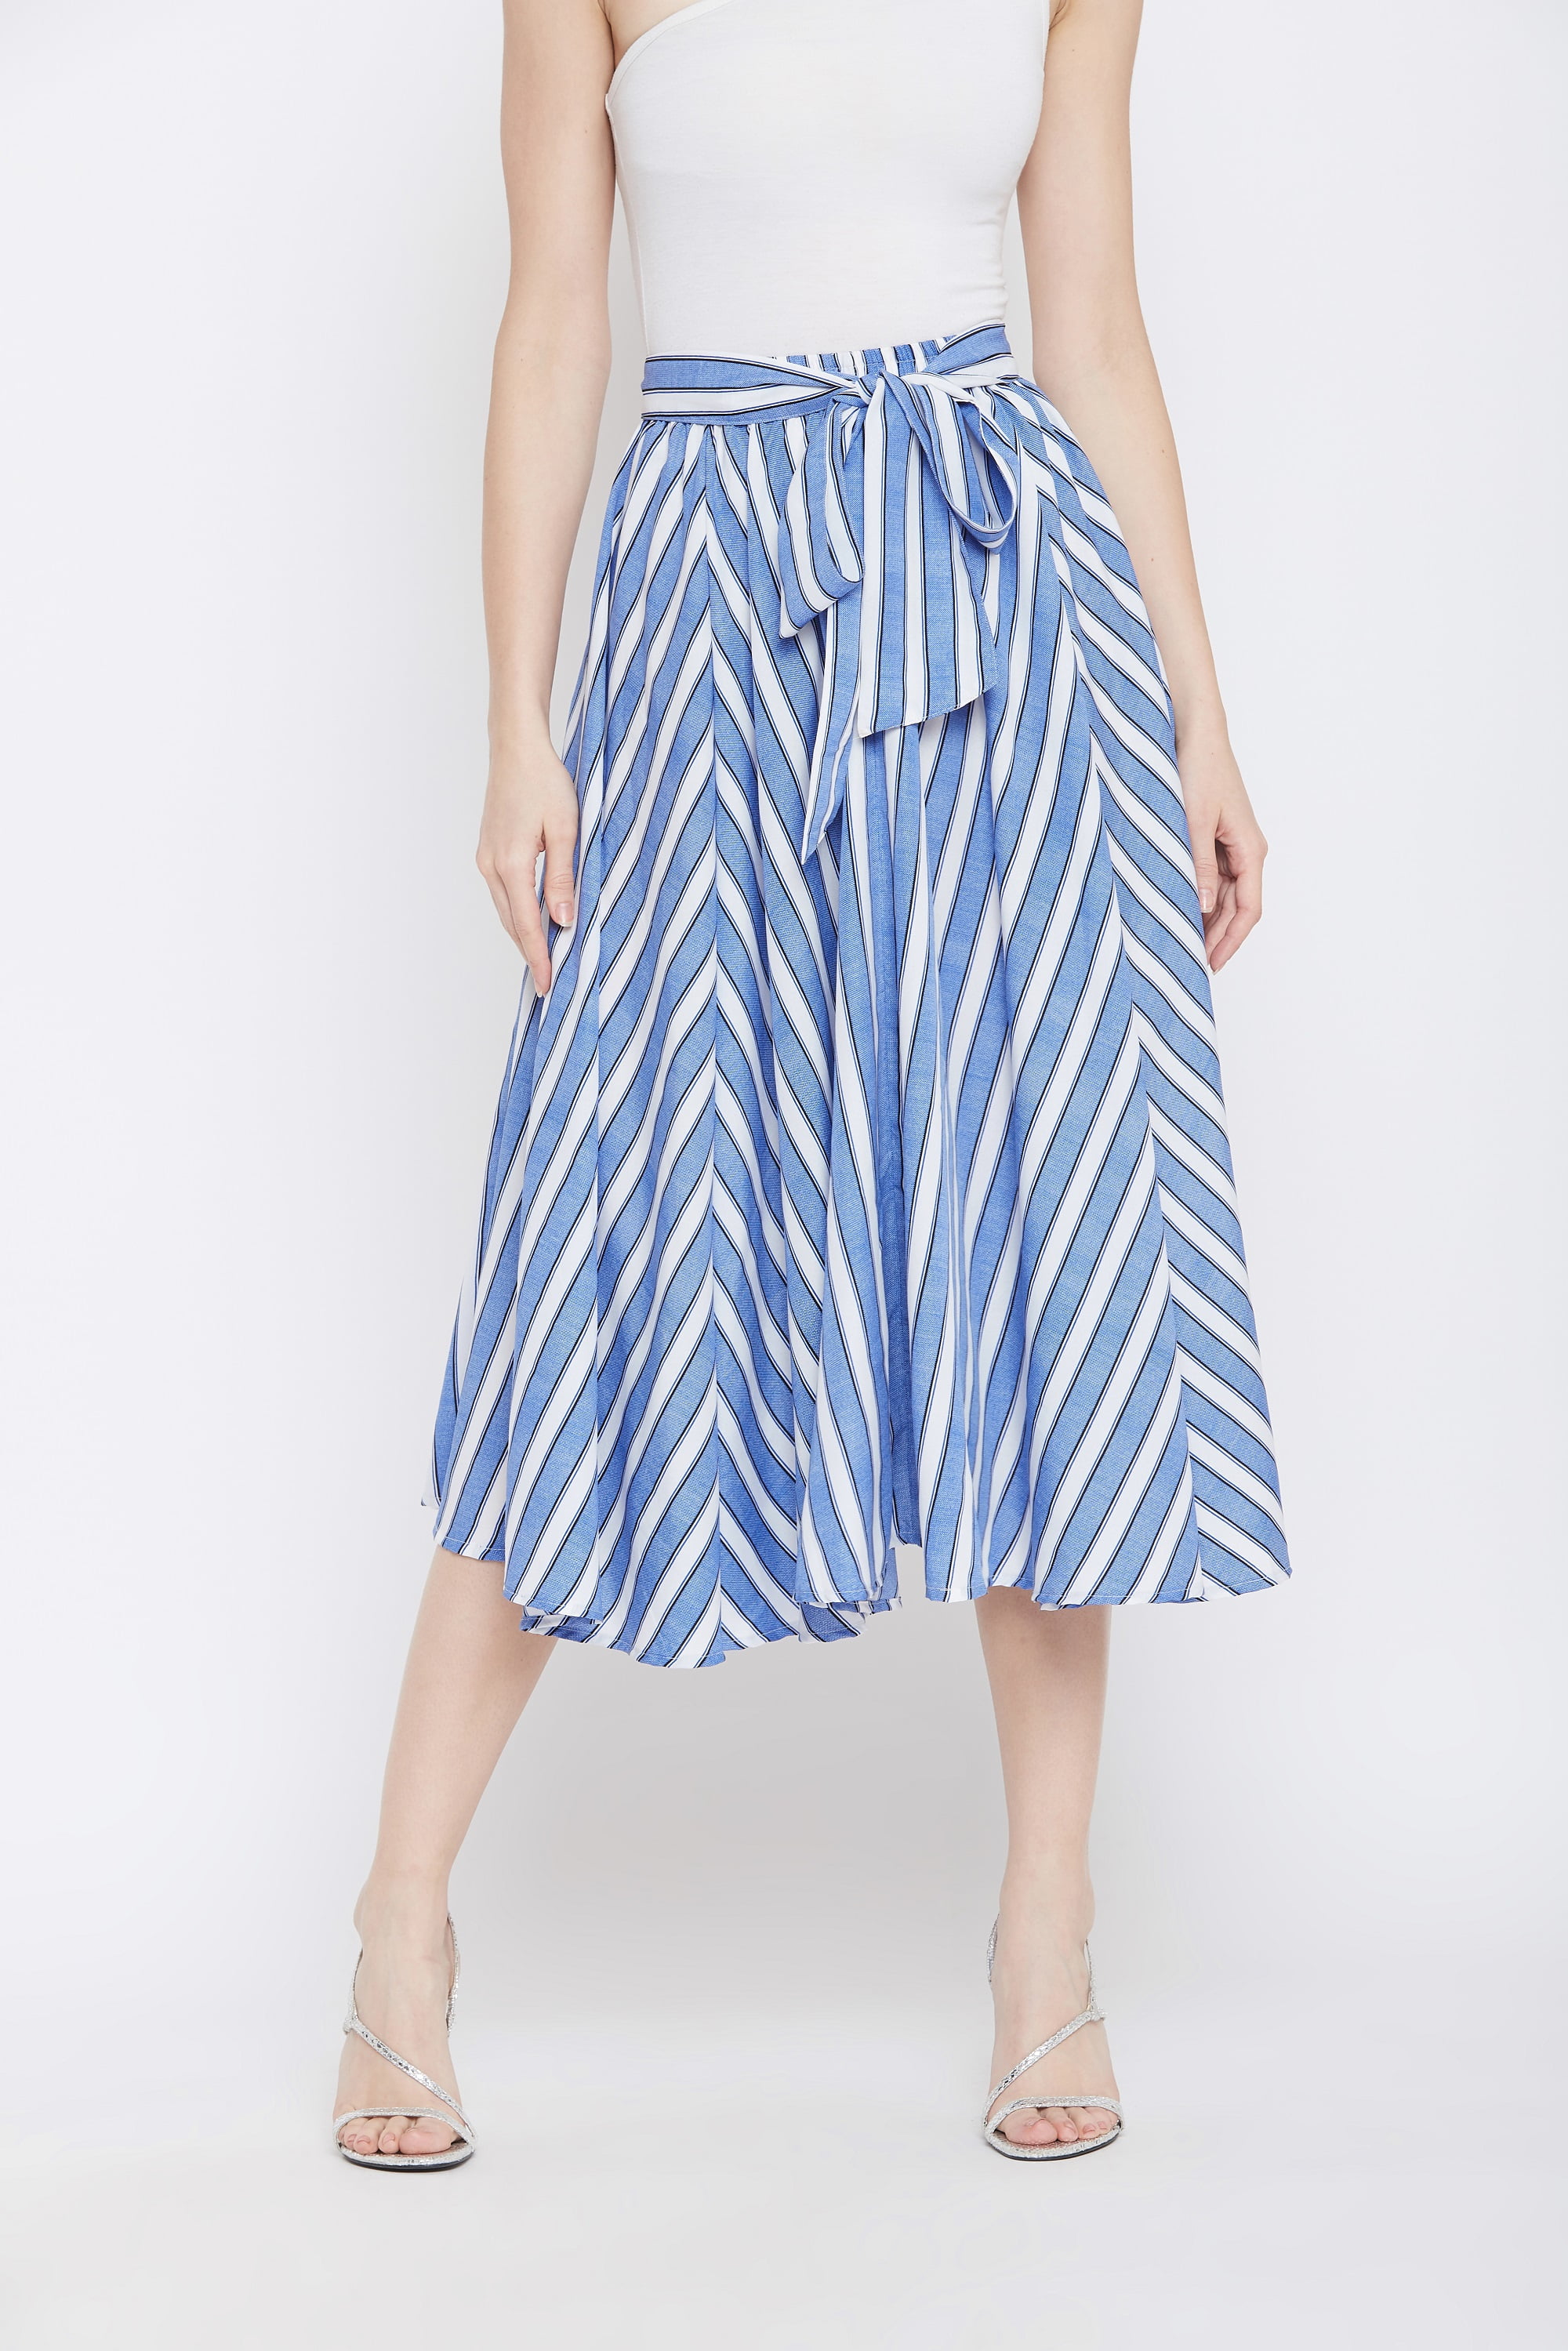 Oussum - Women Skirts Stripes A- Line Midi Skirt for Ladies Knee Length ...